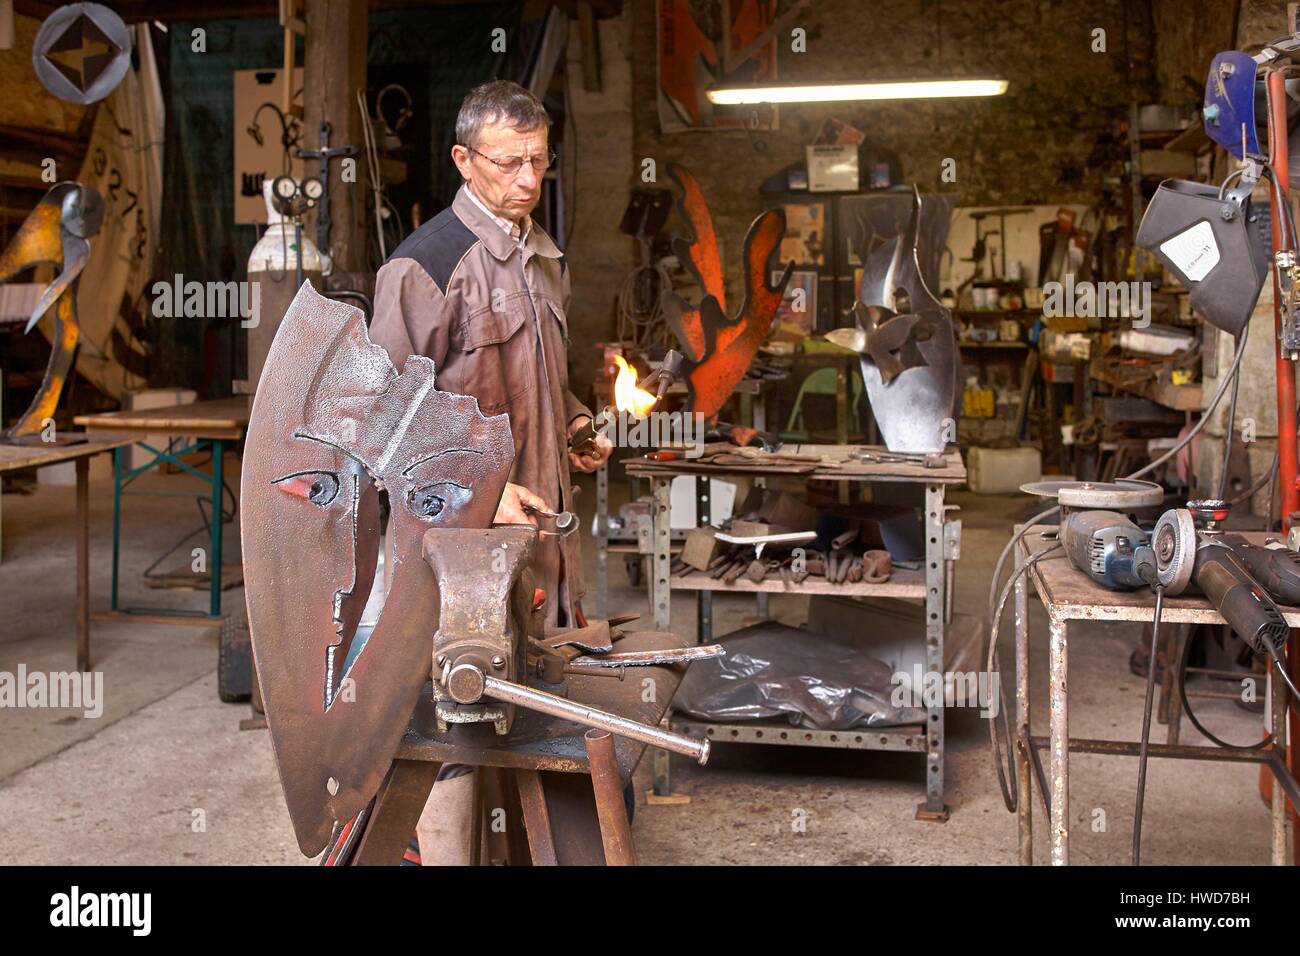 France, Loir et Cher, Villiers sur Loir, Coudray Workshop, Jean Pierre  Renard, Ironworker sculptor Stock Photo - Alamy